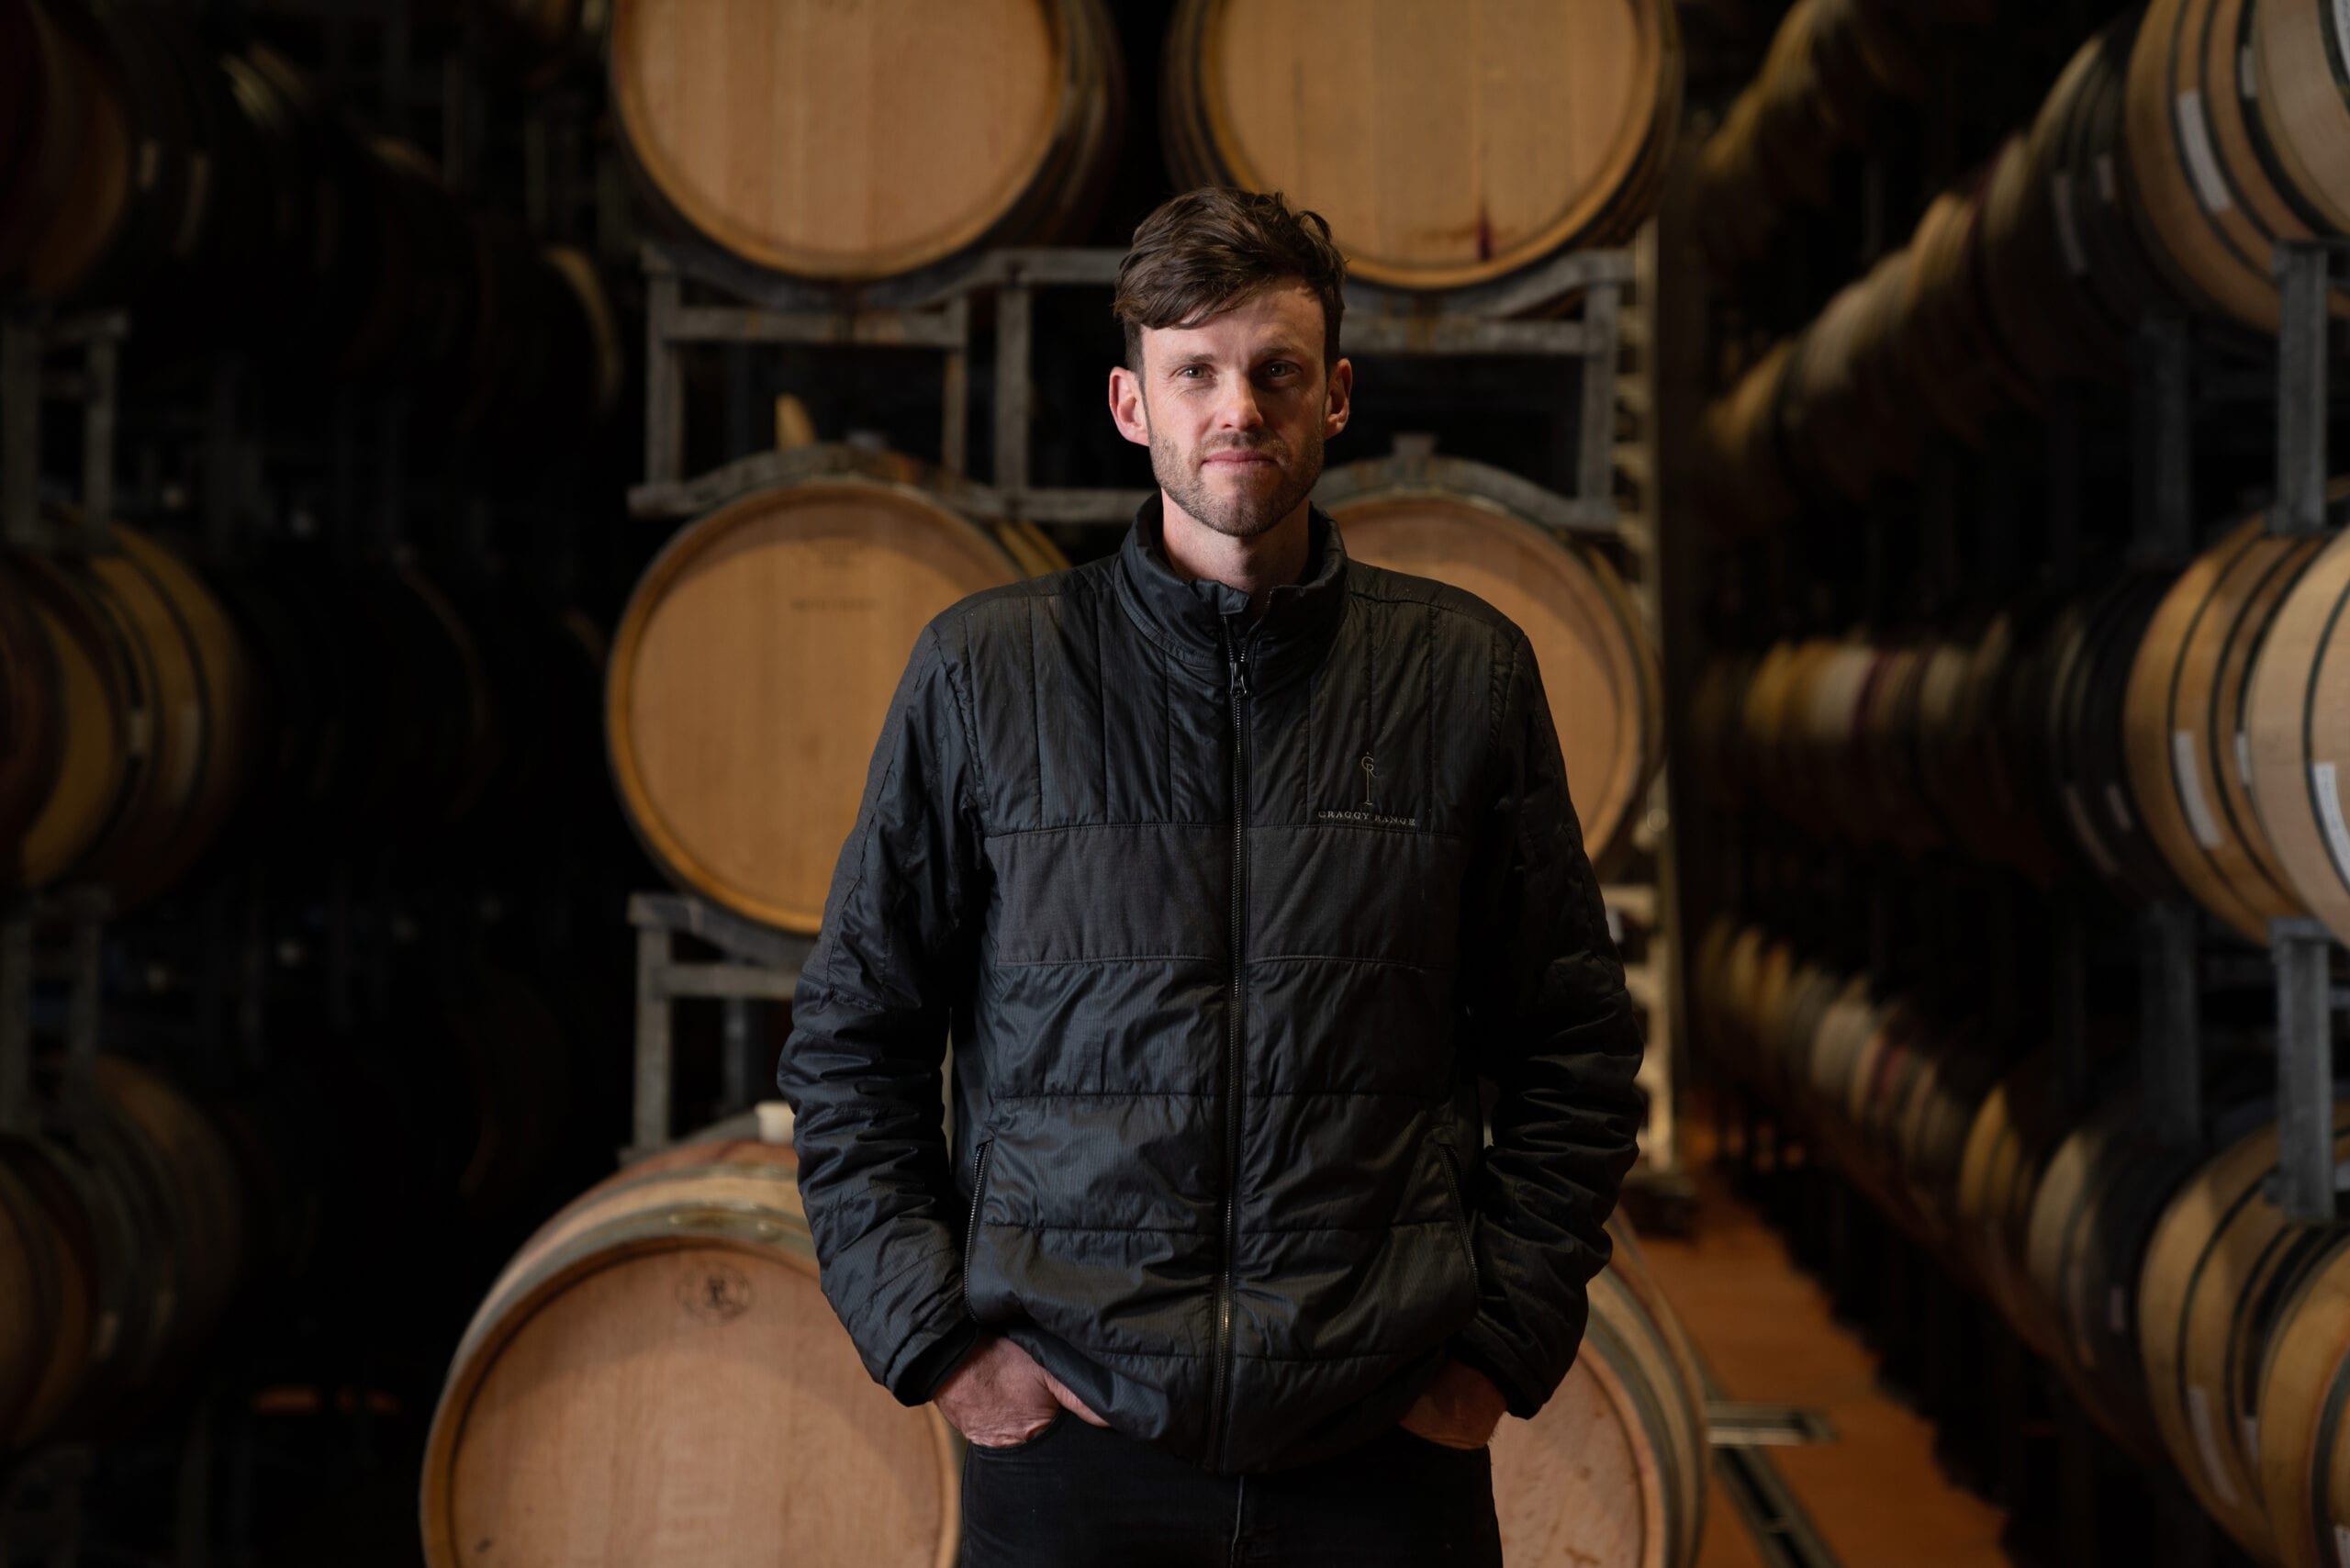 Julian Grounds, Winemaker at Craggy Range